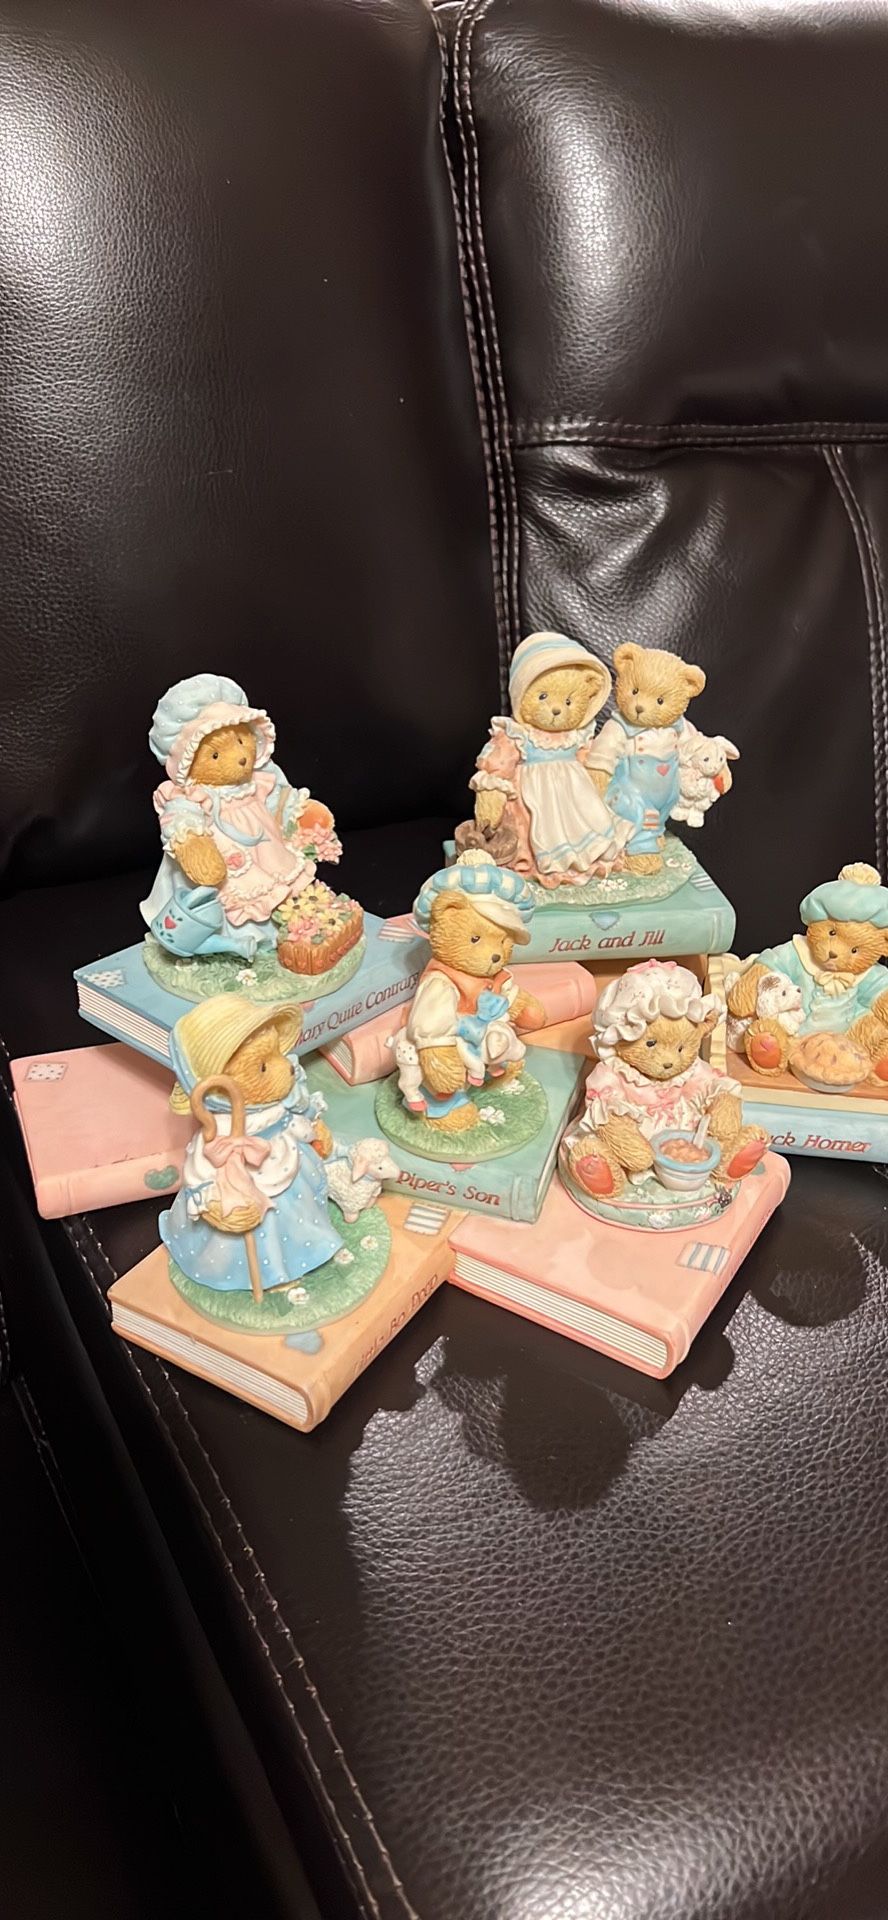 Cherished Teddies Nursery Rhymes Platform Figurines